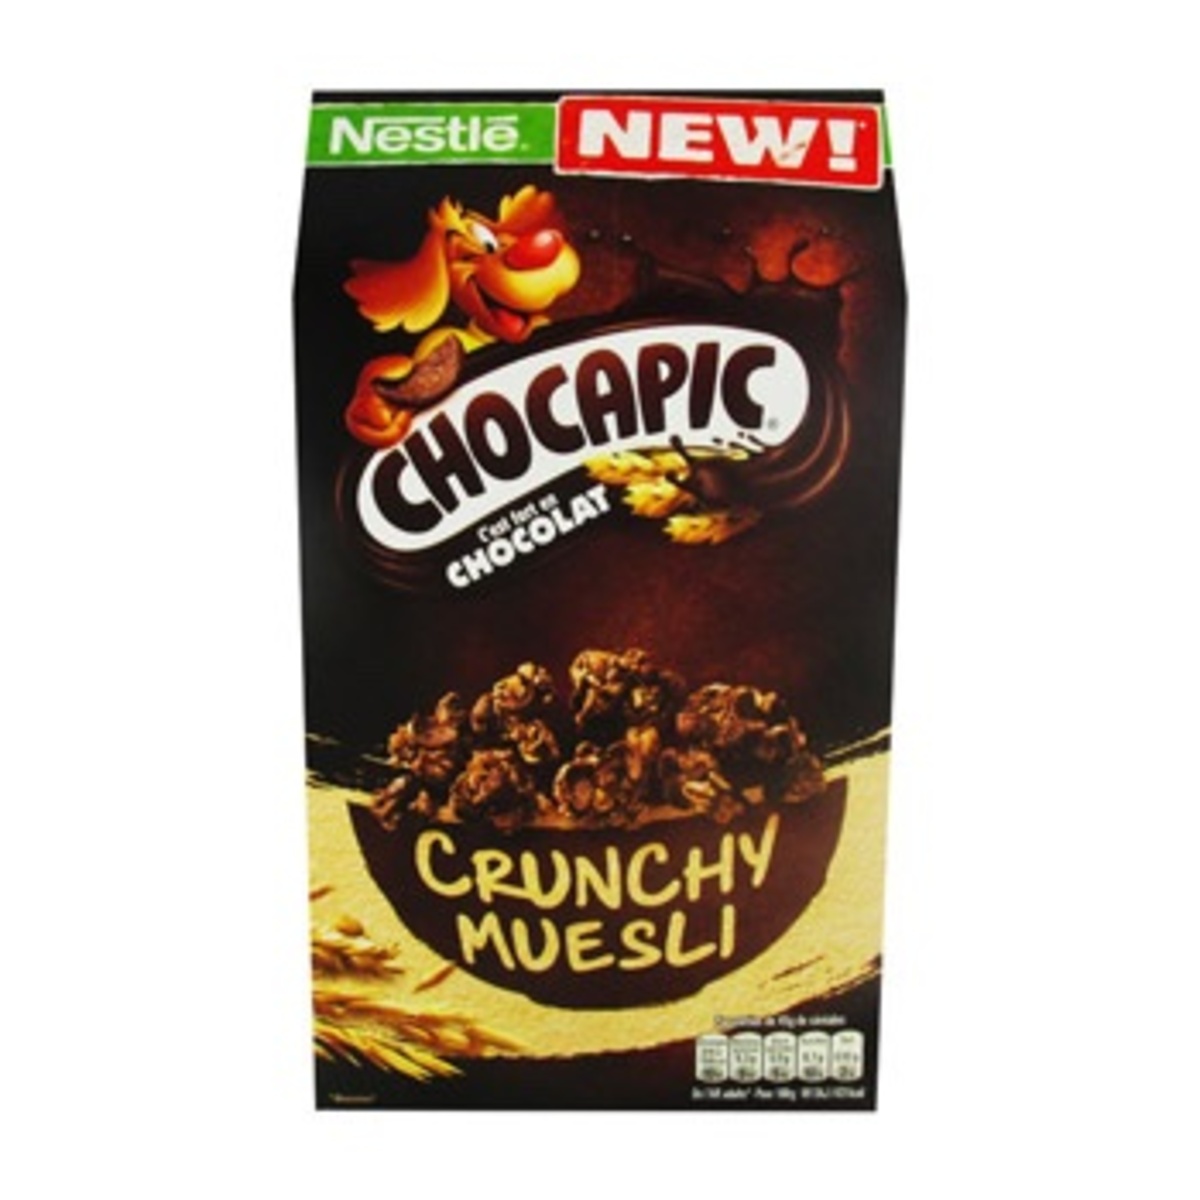 cereales chocapic crunchy muesli nestle 420g